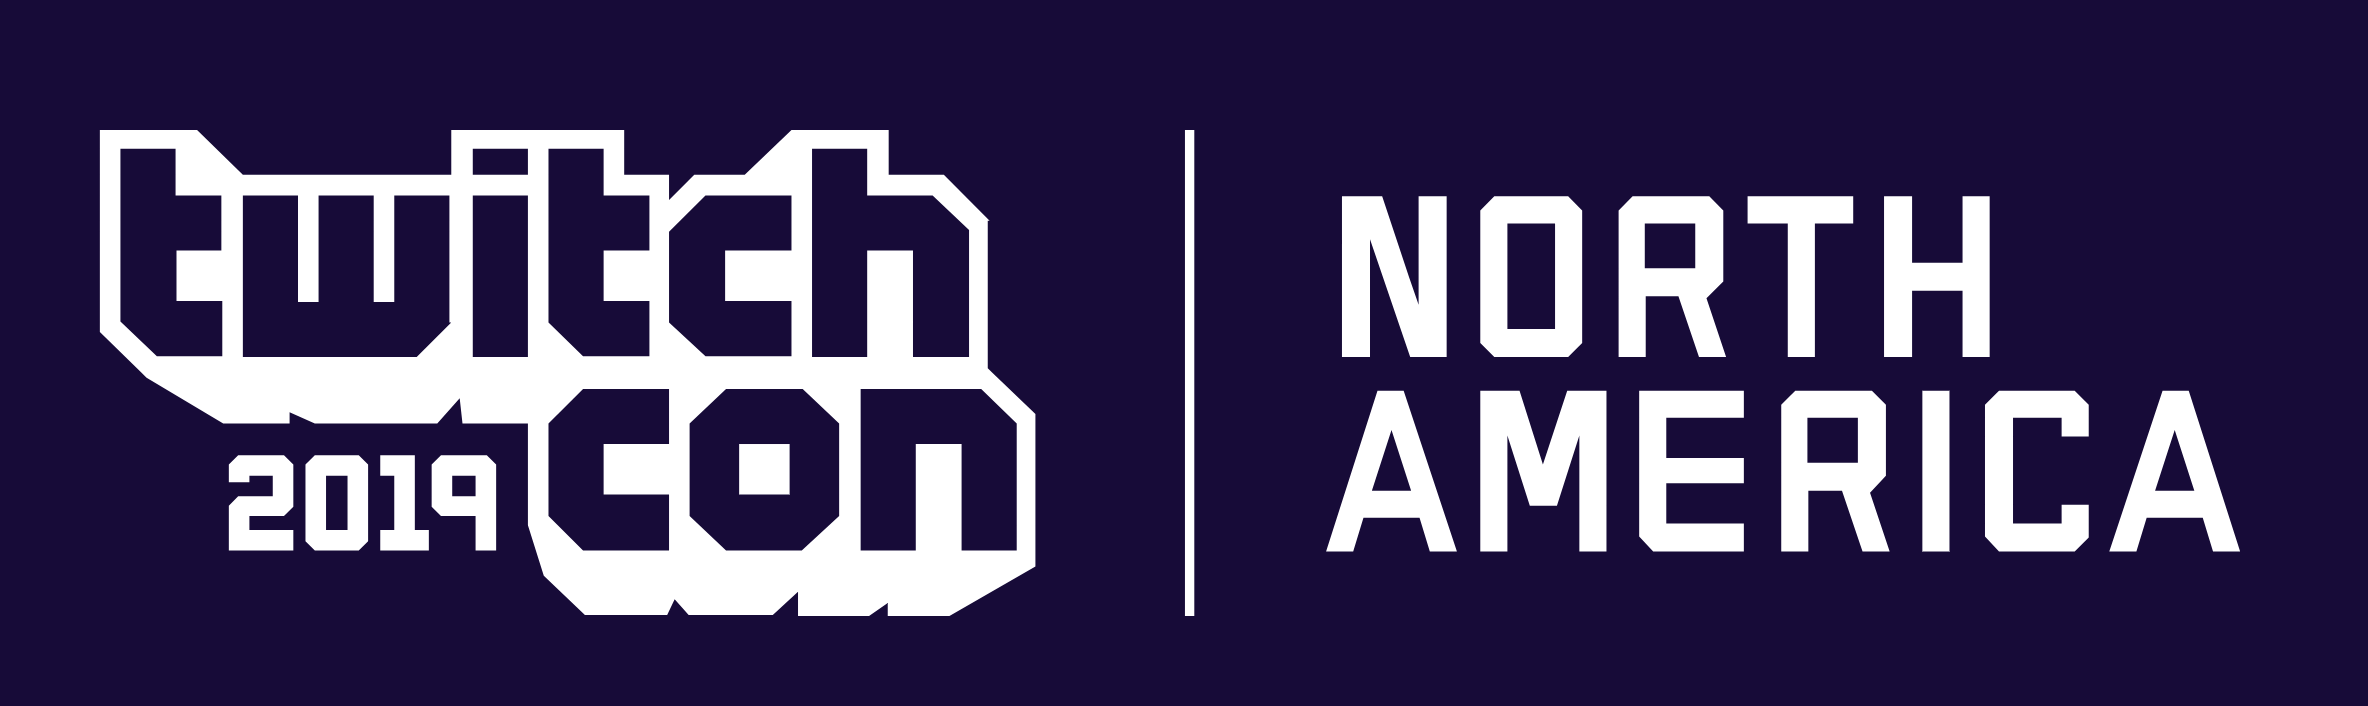 TwitchCon 2019 logo